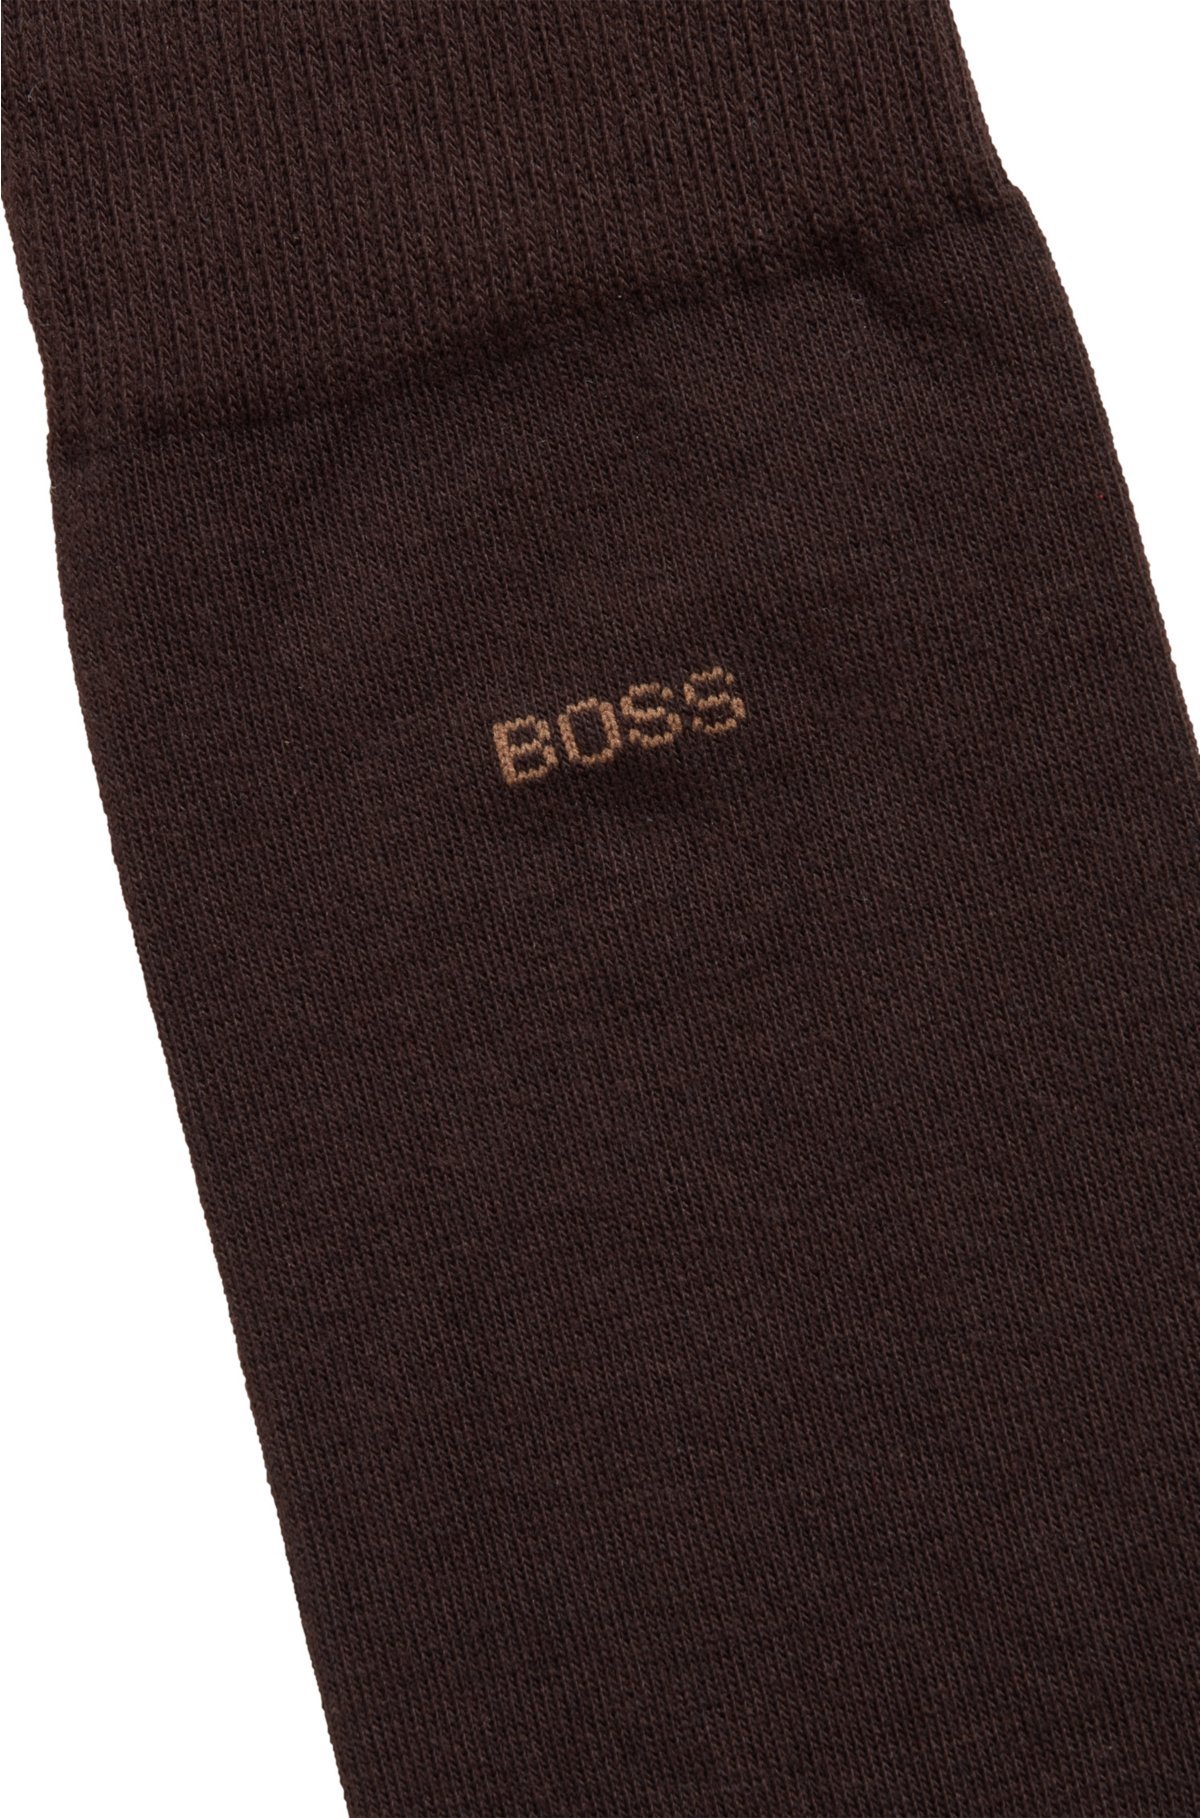 Regular-length logo socks in combed stretch cotton, Dark Brown